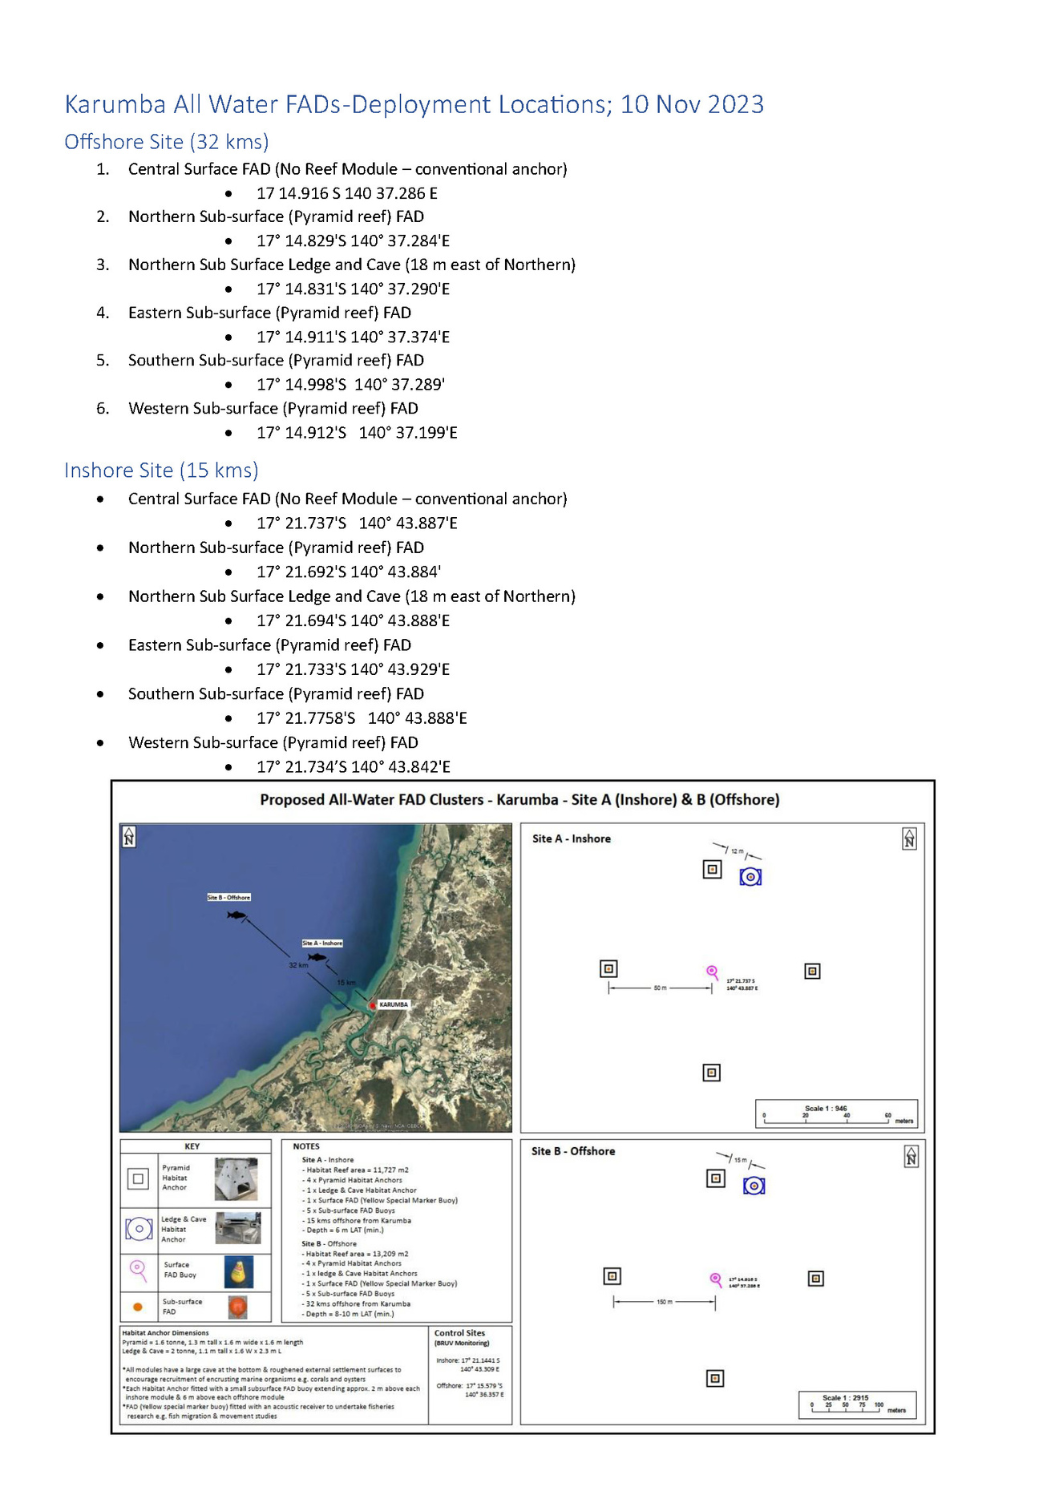 Reef deployment locations 1